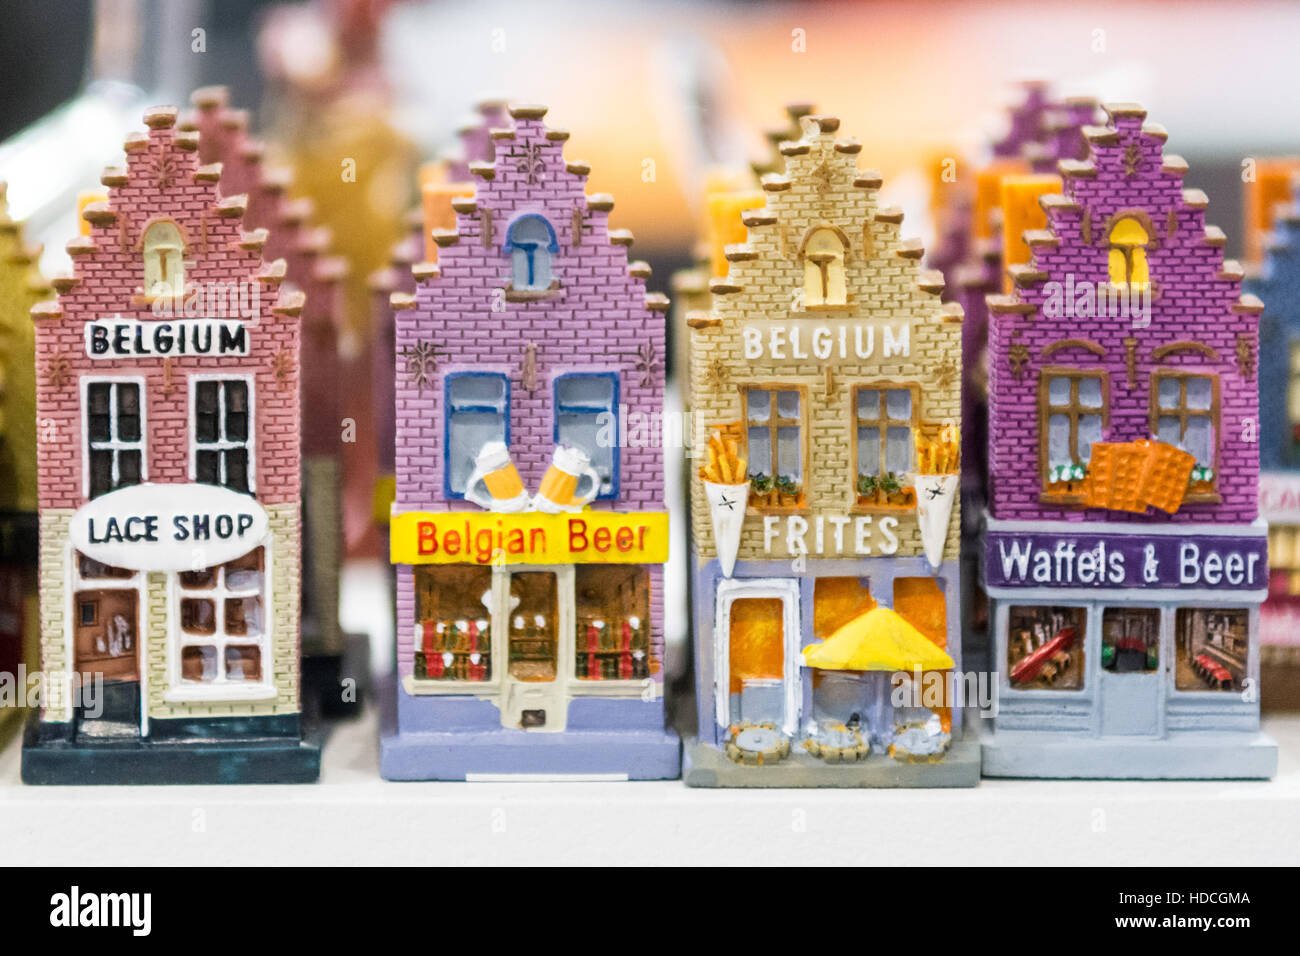 Brussels Travel Tourism Retro Look Christmas Ornament/Magnet/Dollhouse miniature